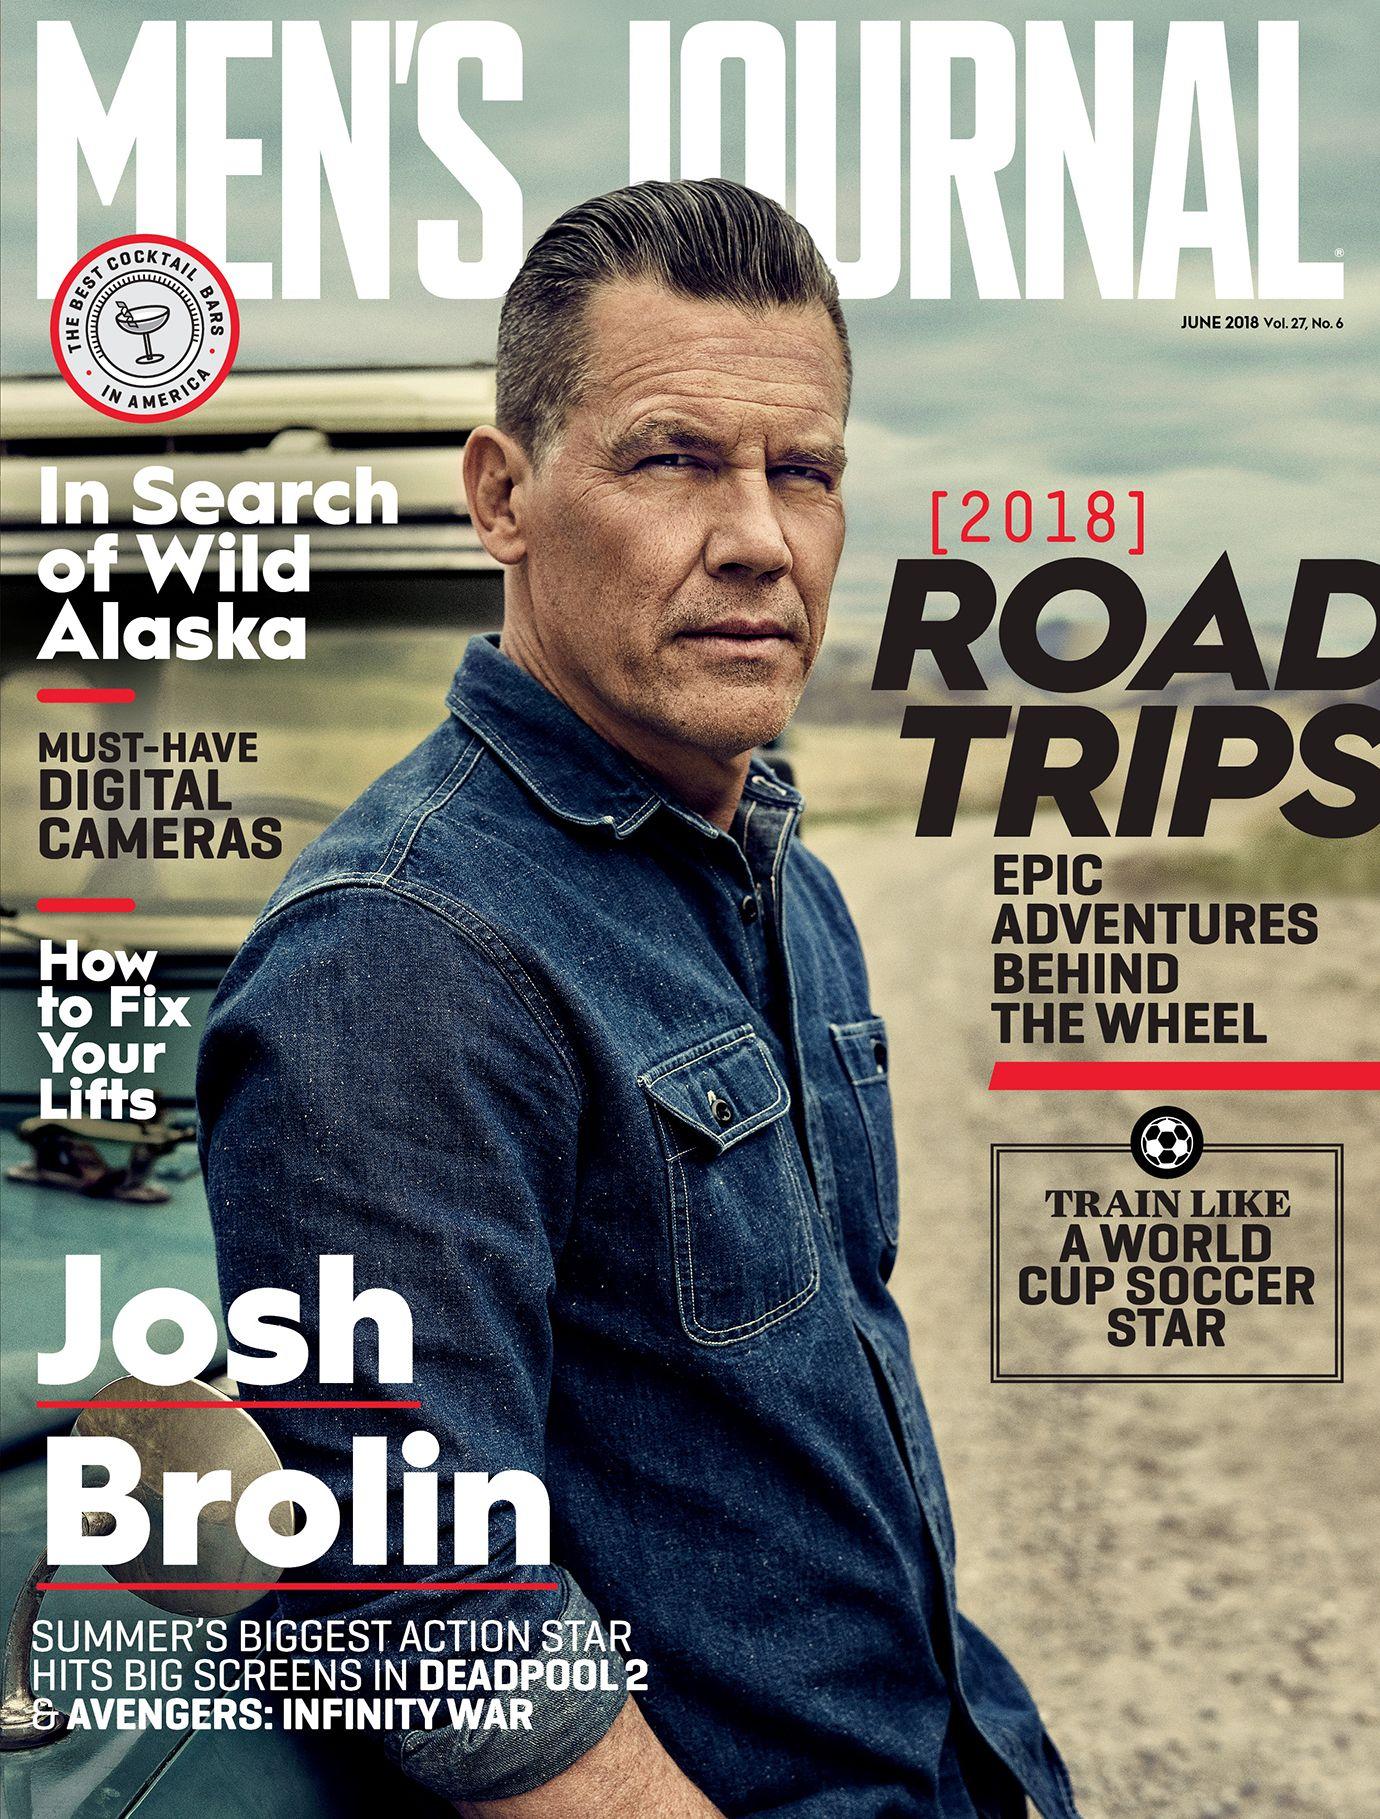 Josh Brolin Covers the June 2018 Issue of Men's Journal